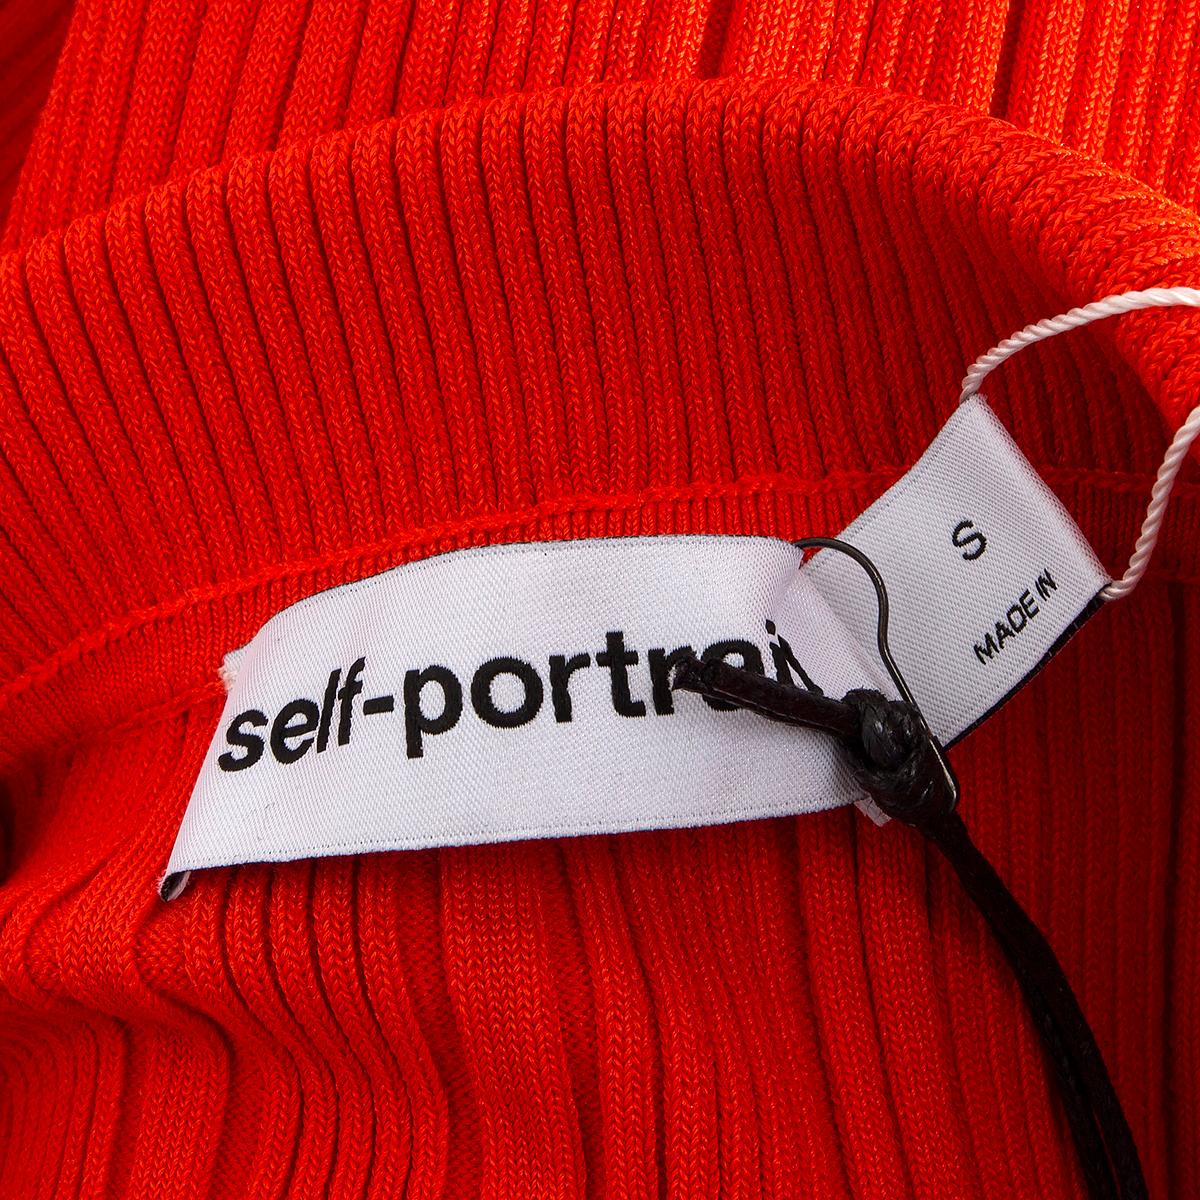 self portrait red knit dress